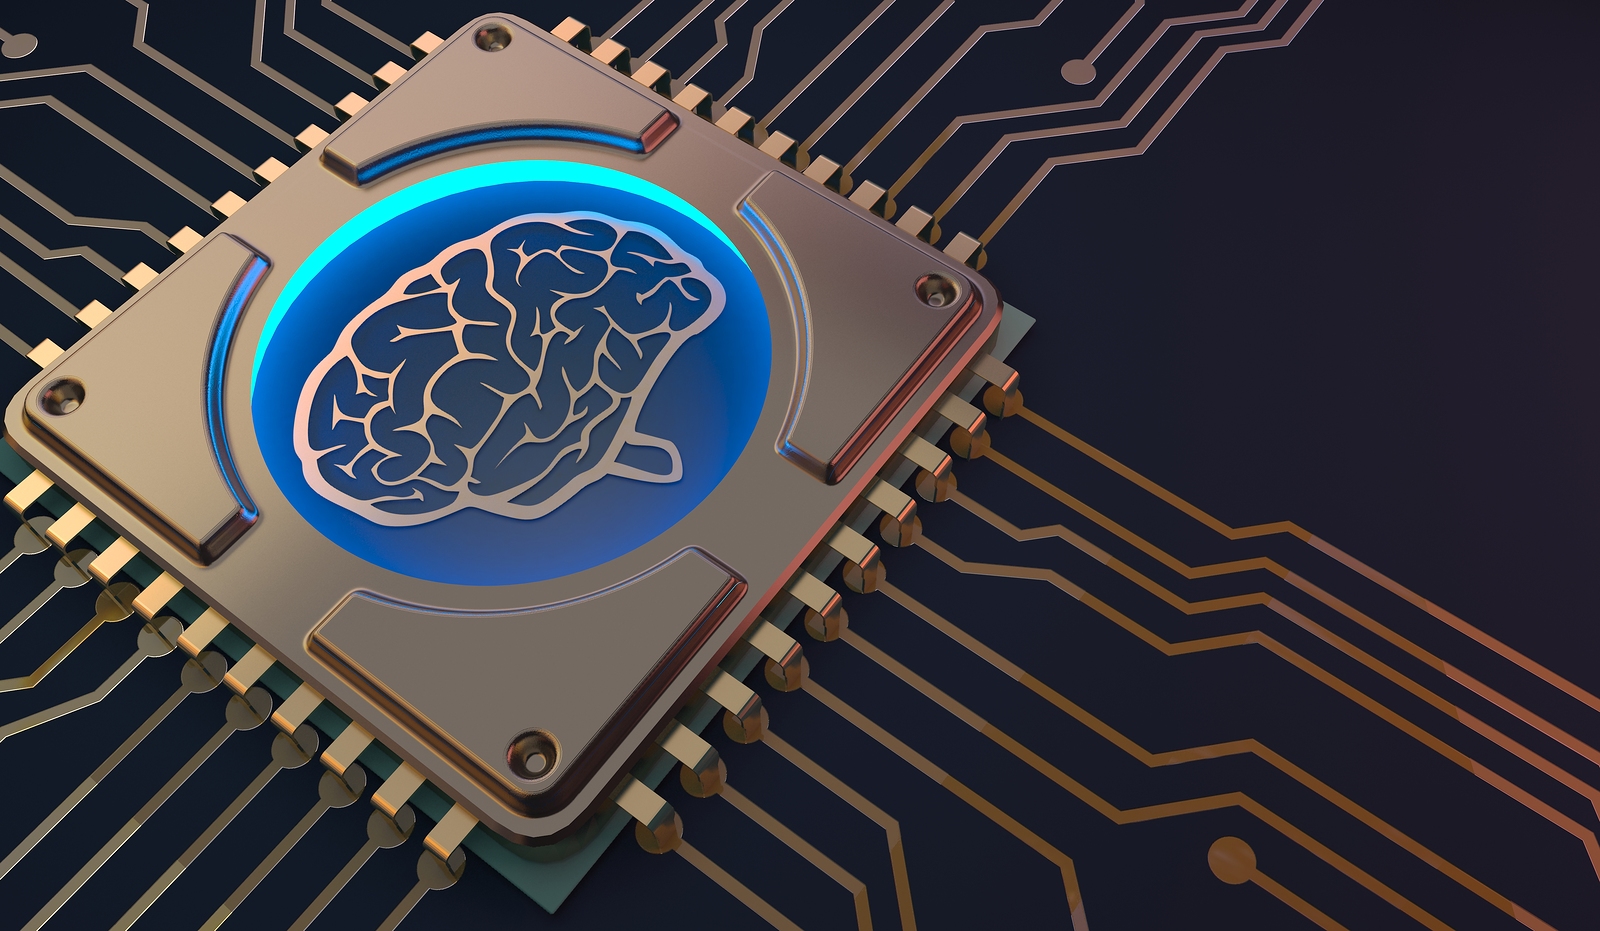 ¡Aprende Machine Learning! Google lanza recursos gratuitos sobre inteligencia artificial